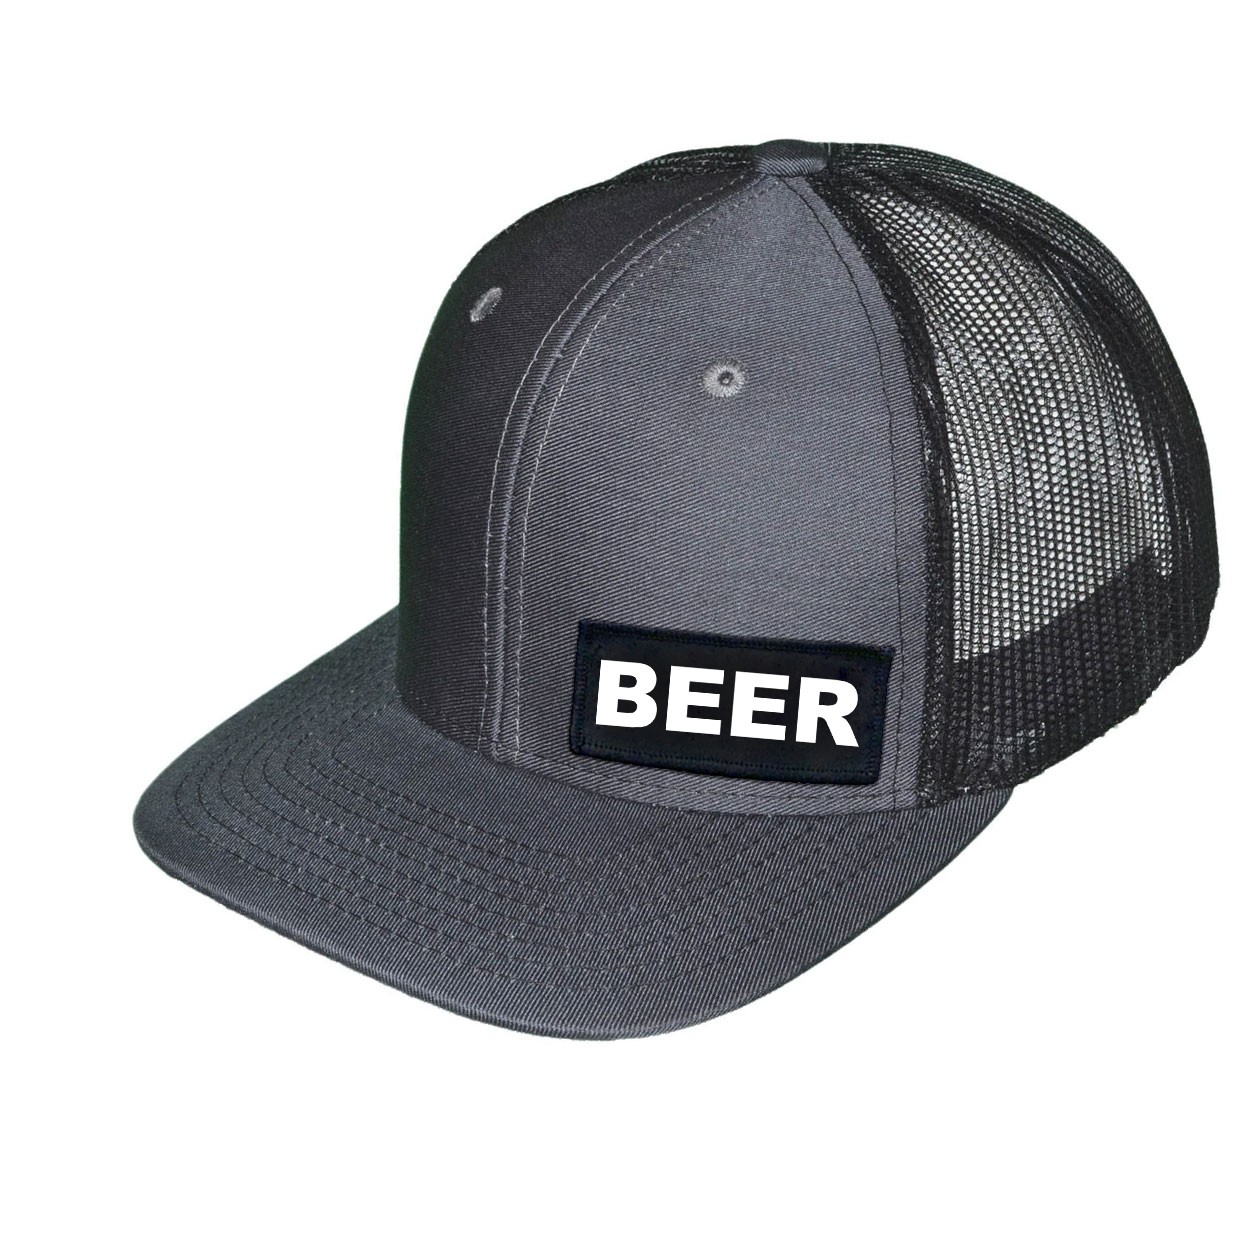 Beer Brand Logo Night Out Woven Patch Snapback Trucker Hat Dark Gray/Black (White Logo)